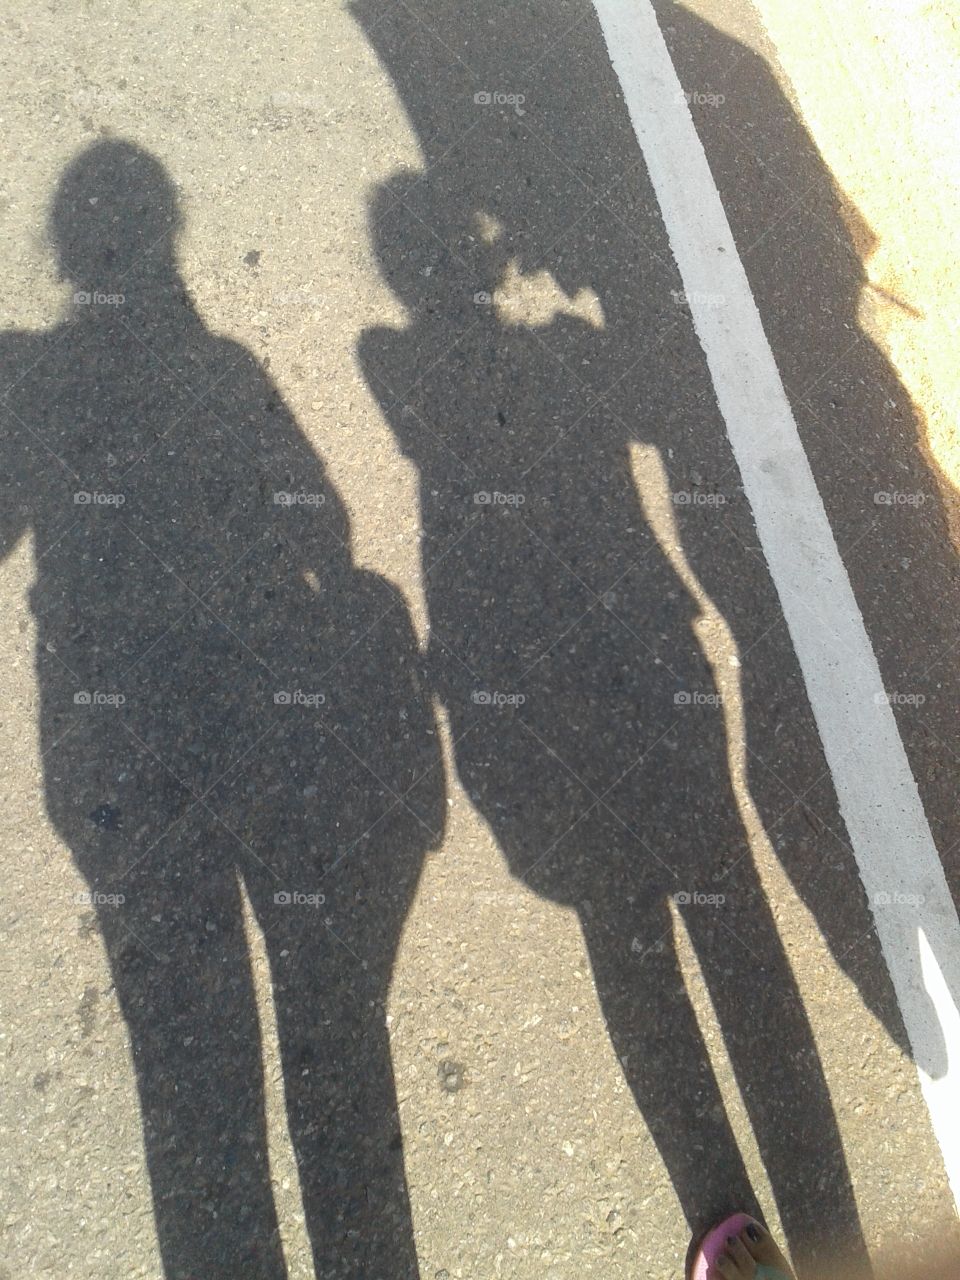 shadows of three girl walking through a road